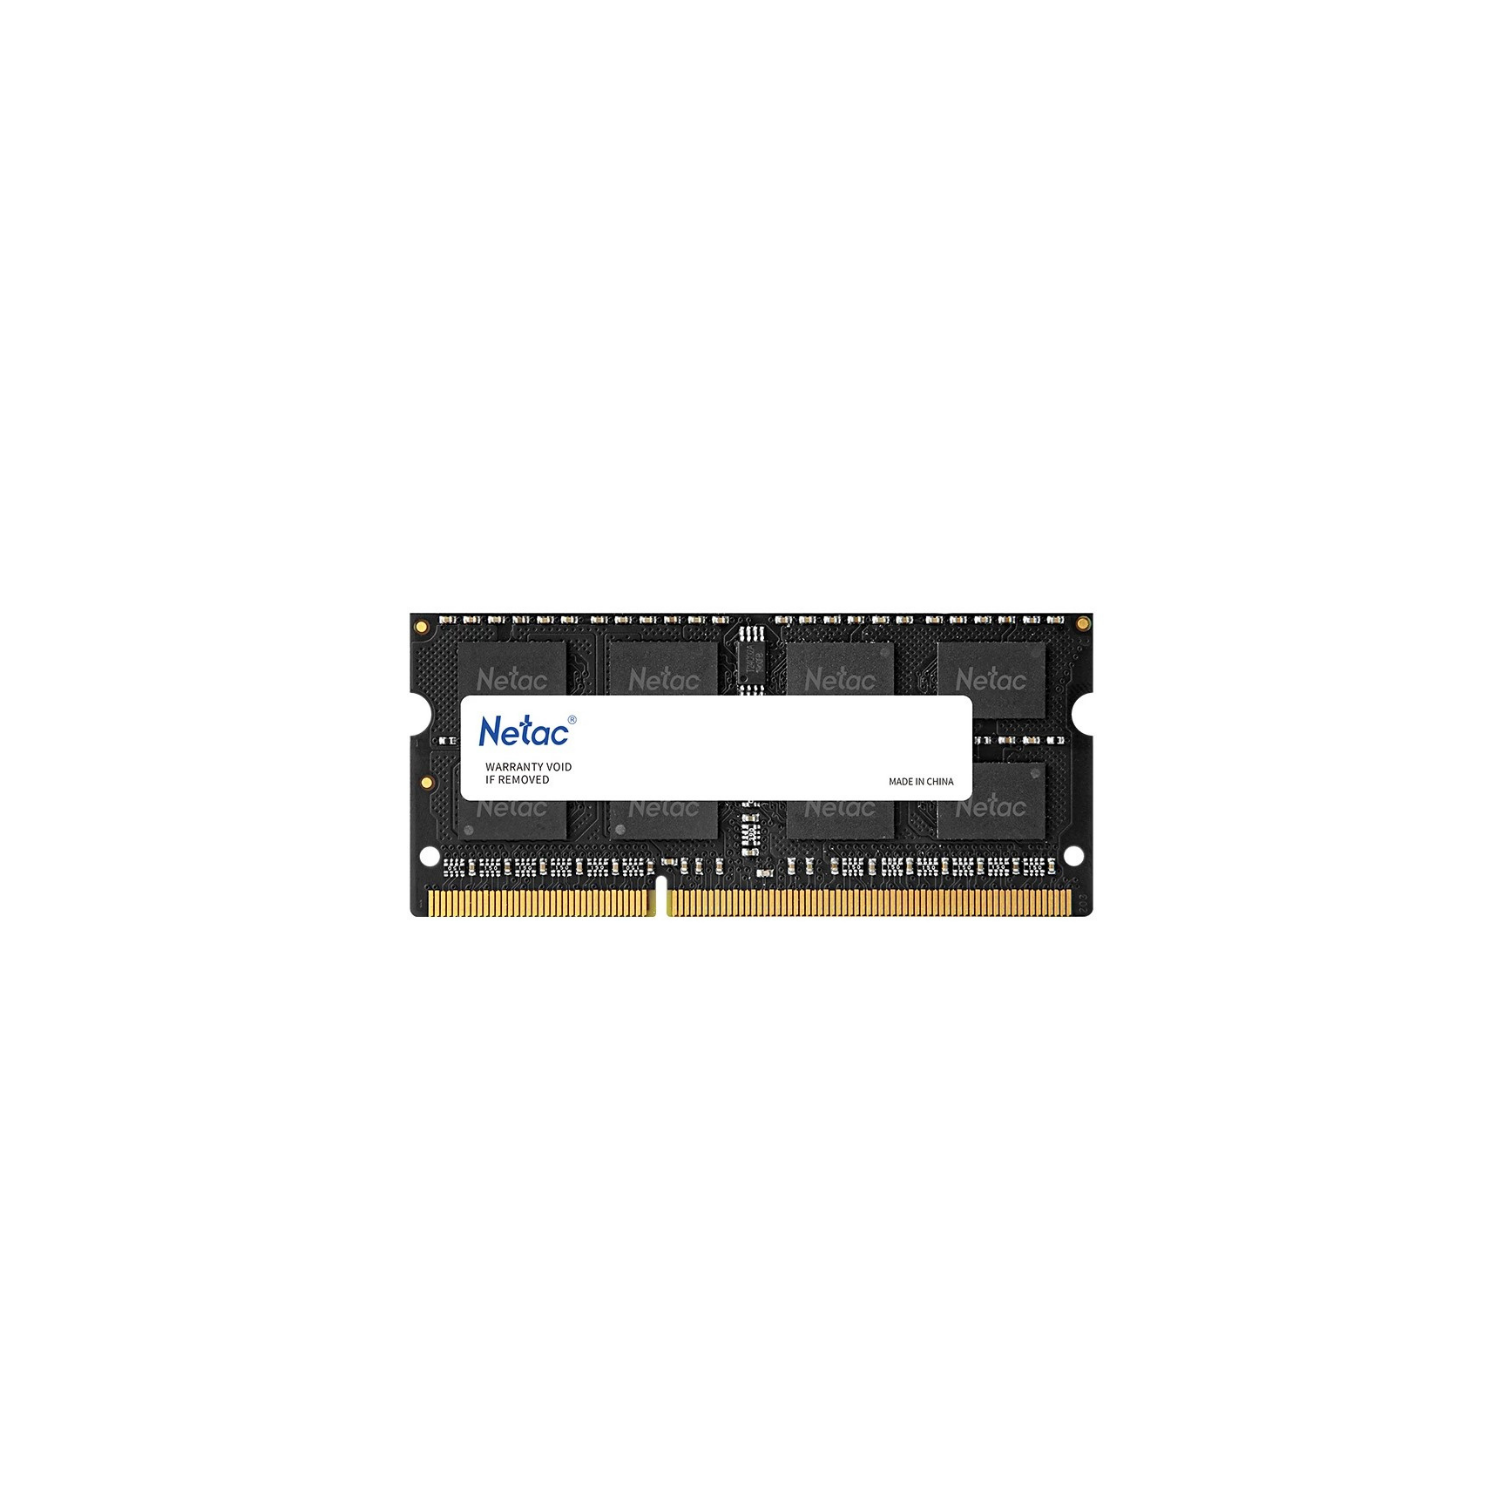 New Netac 4GB DDR3 Ram 1600MHz Laptop Memory Ram 1.35V PC3-12800 204-Pin SO-DIMM